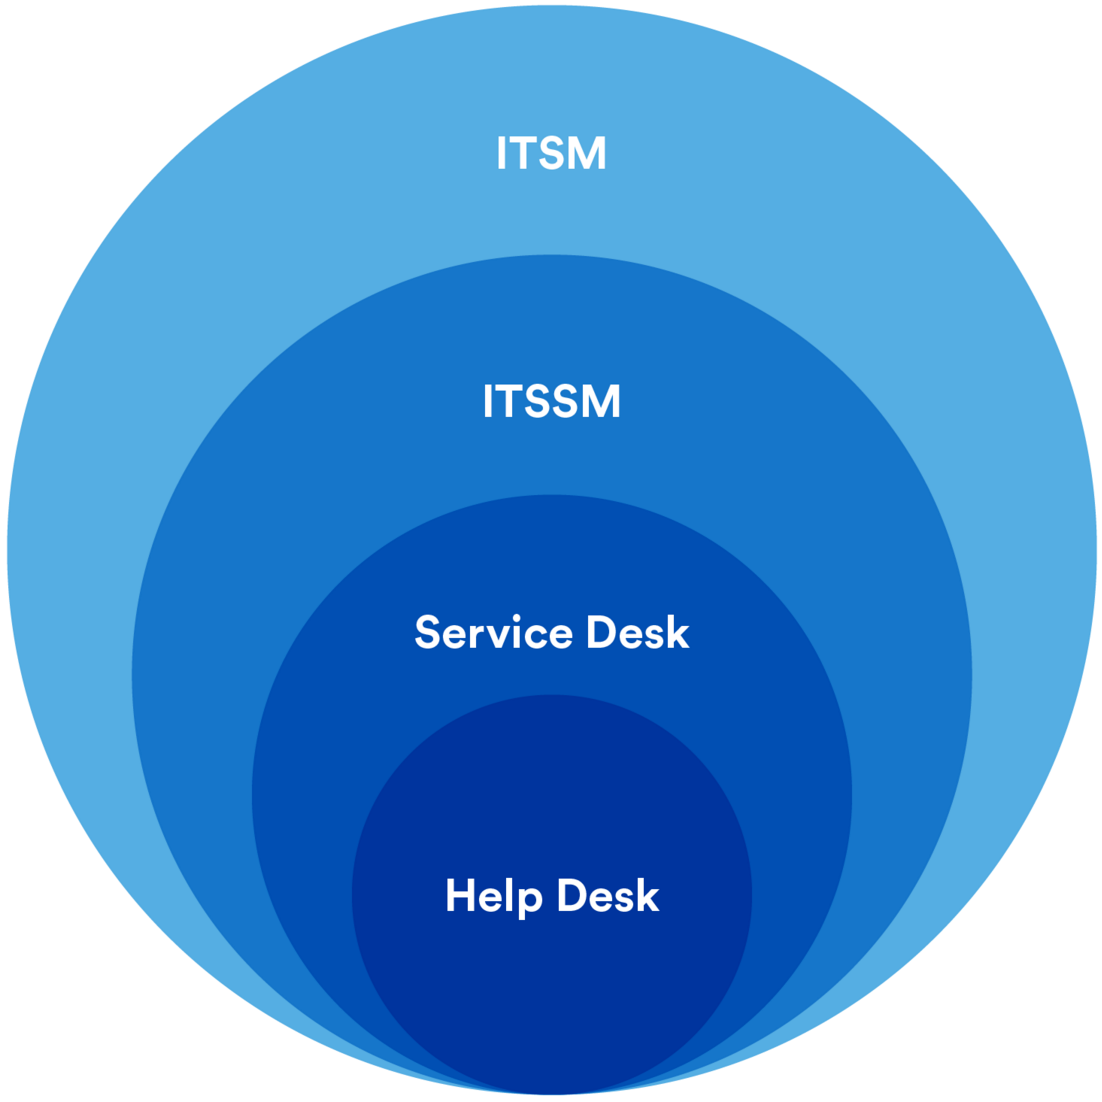 Help desk vs. service desk